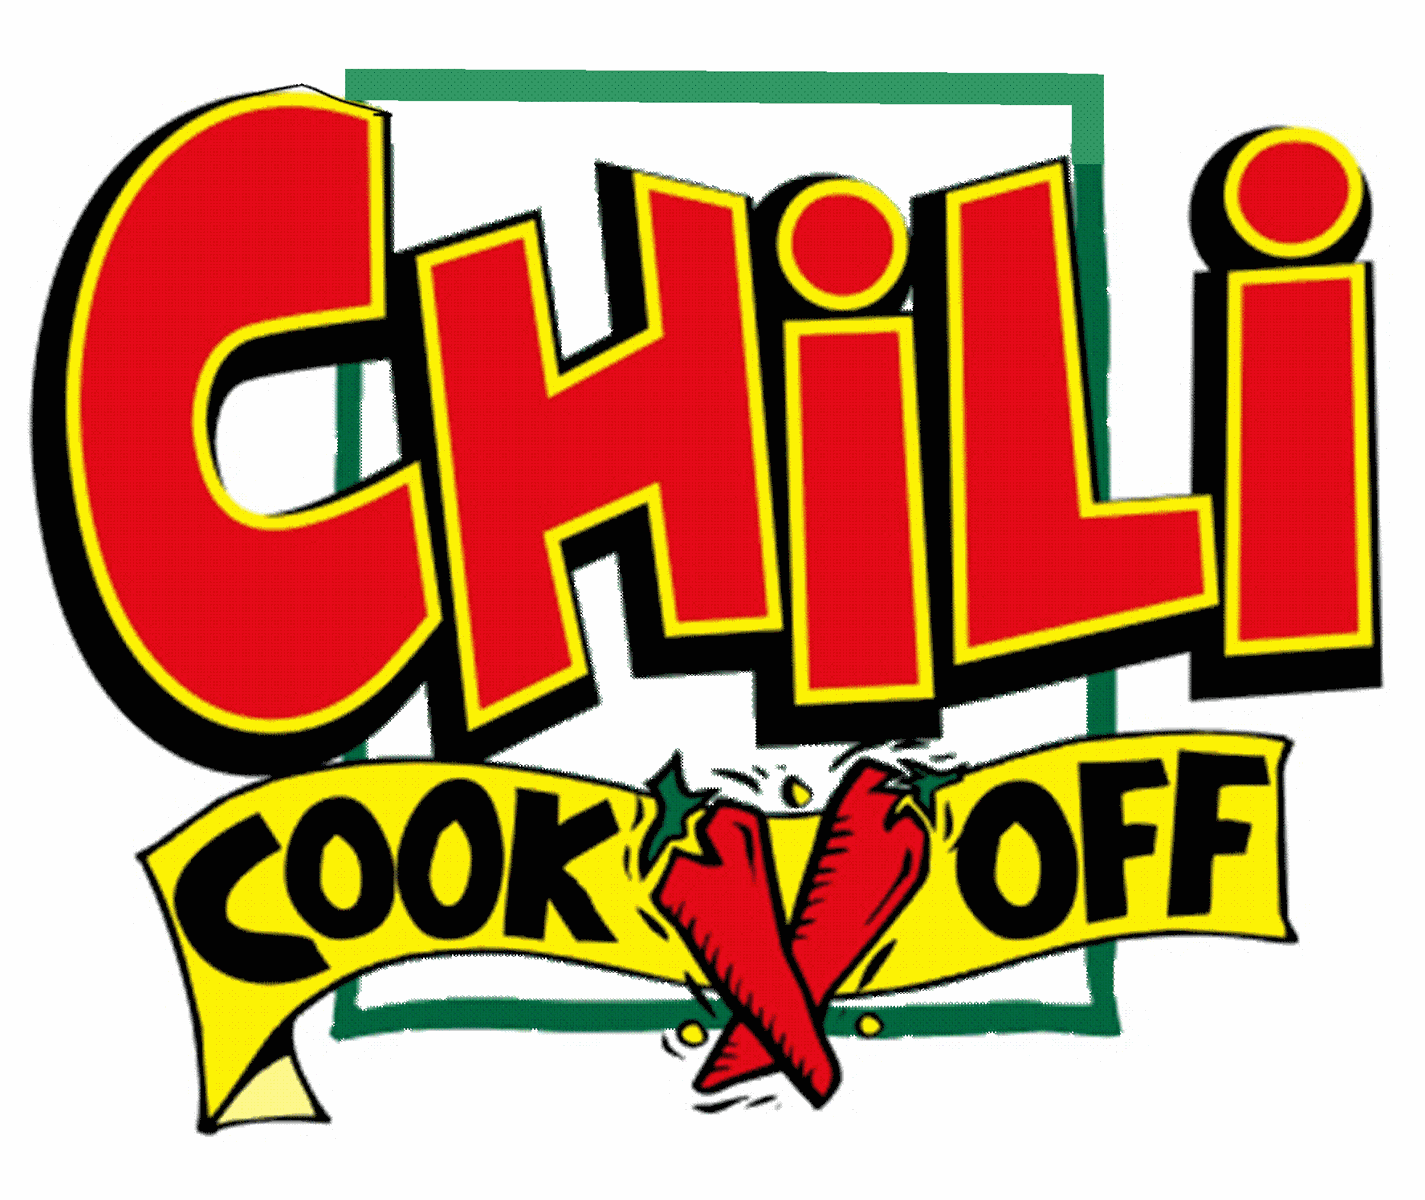 Chili chili cook off